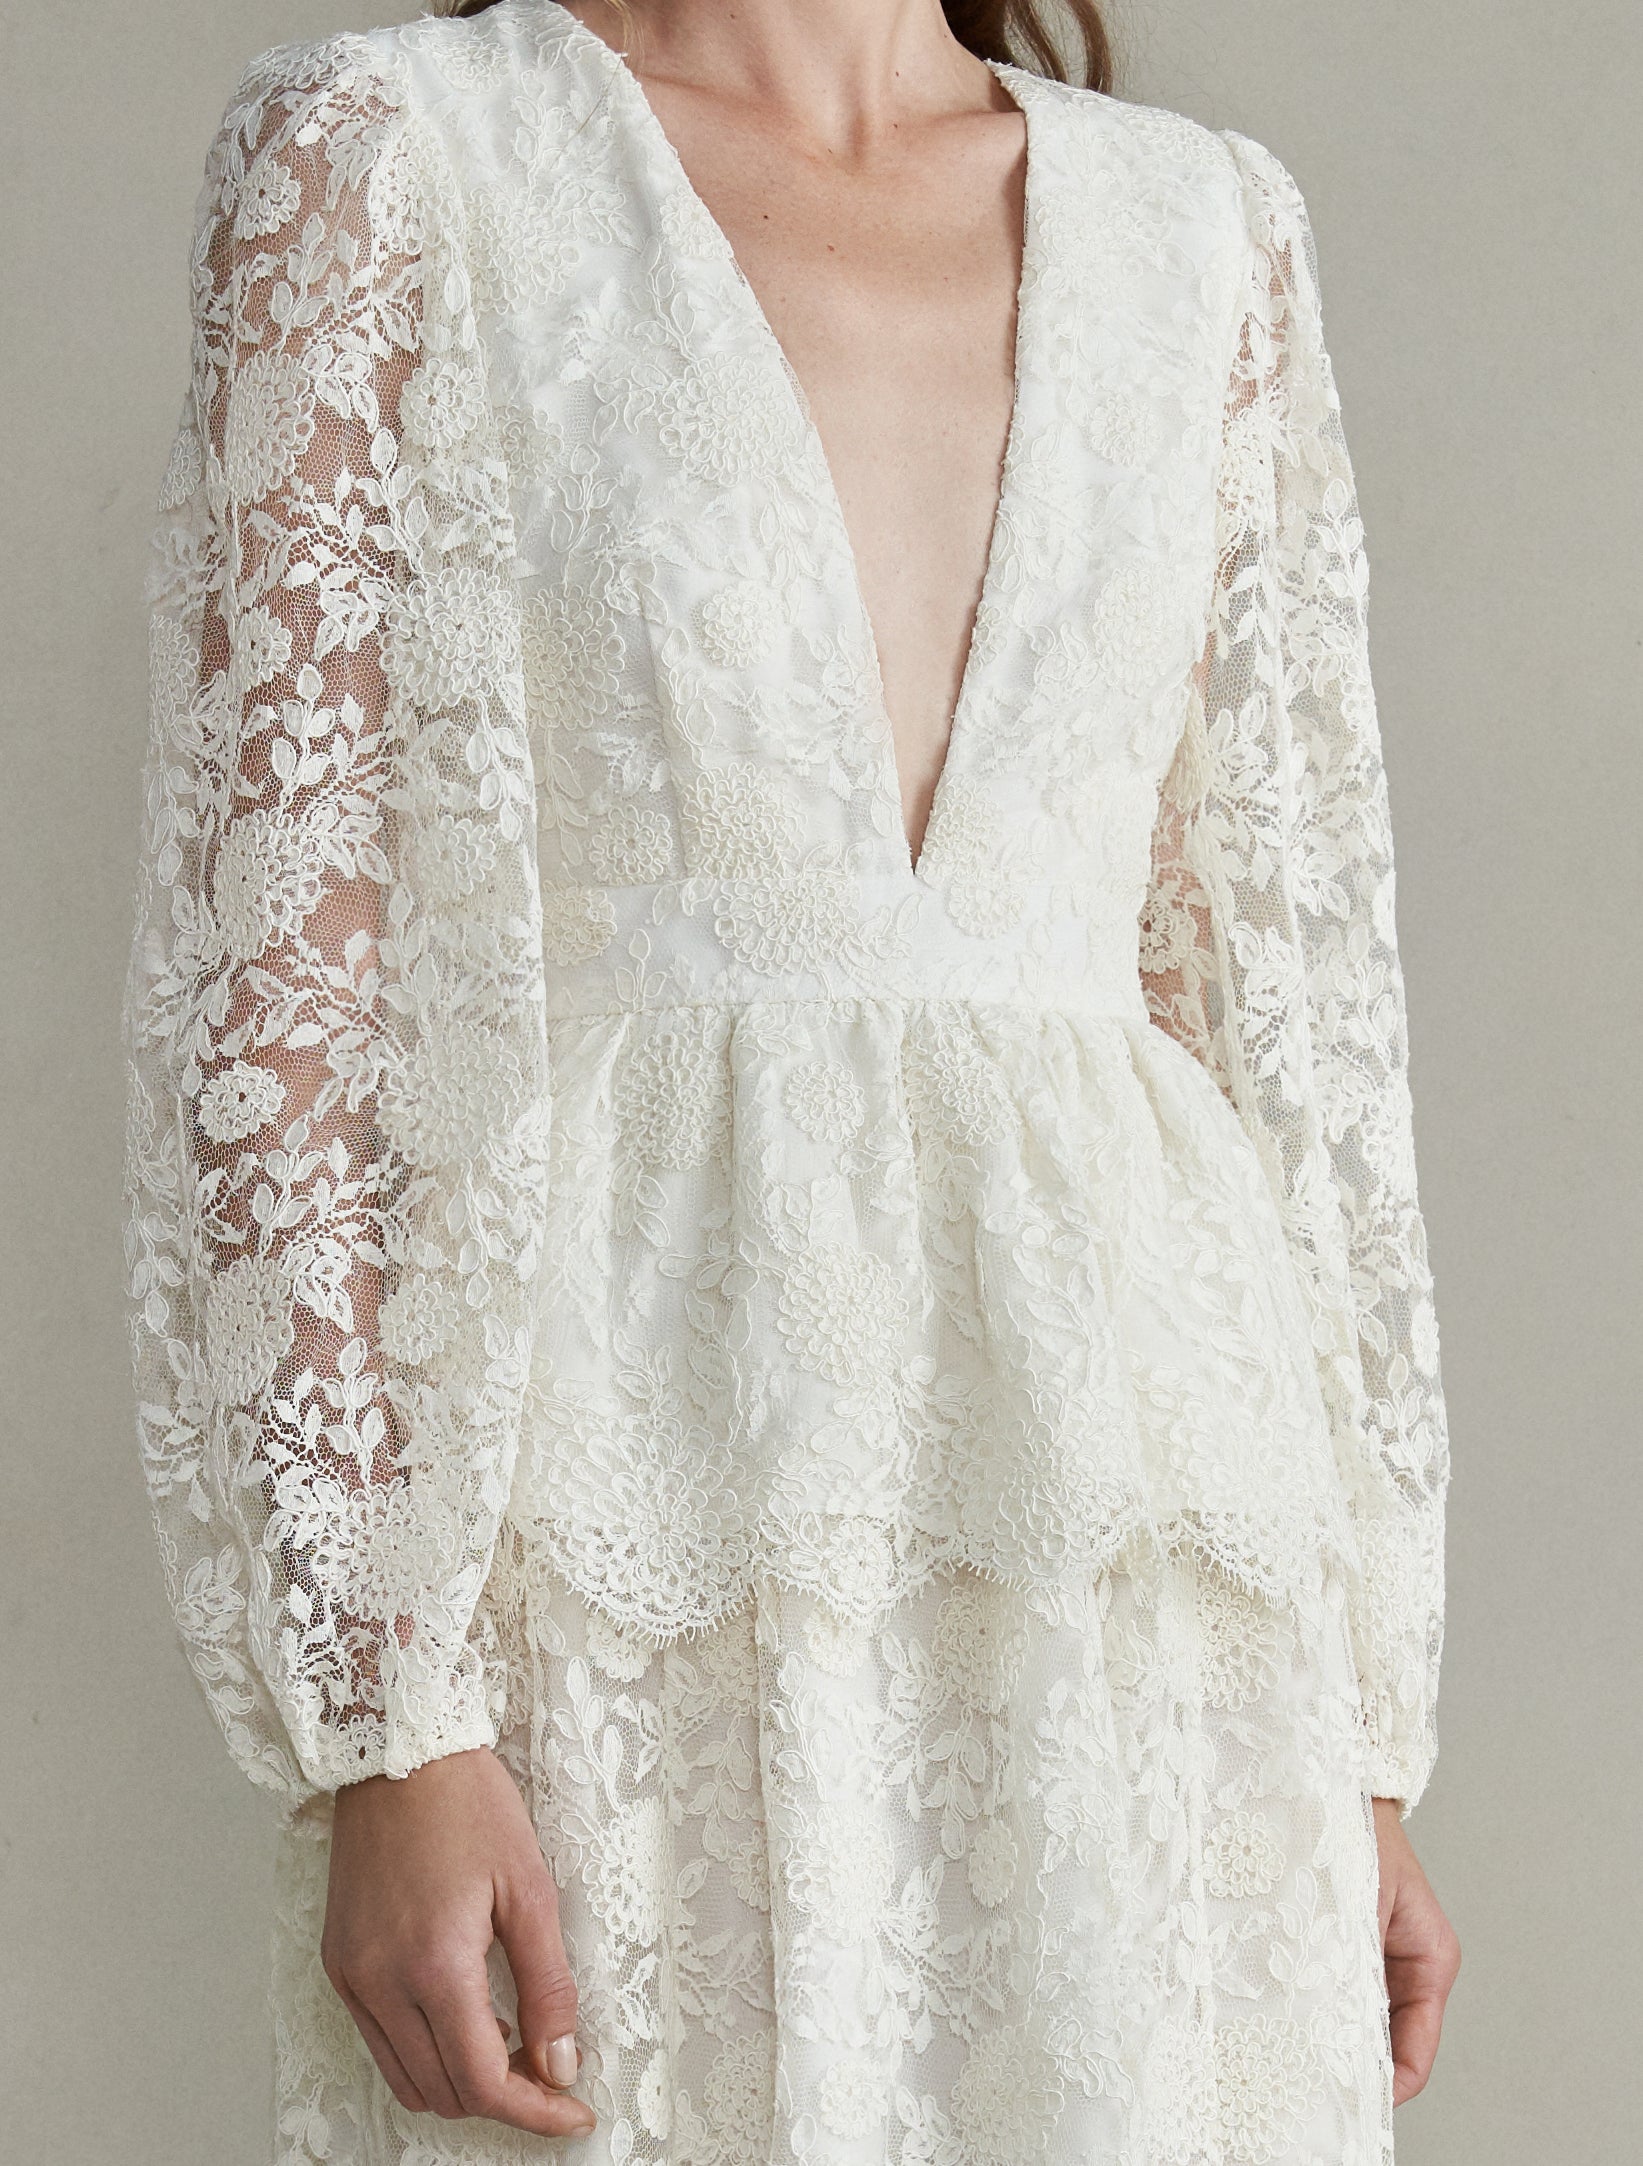 Aphrodite White Lace Gown